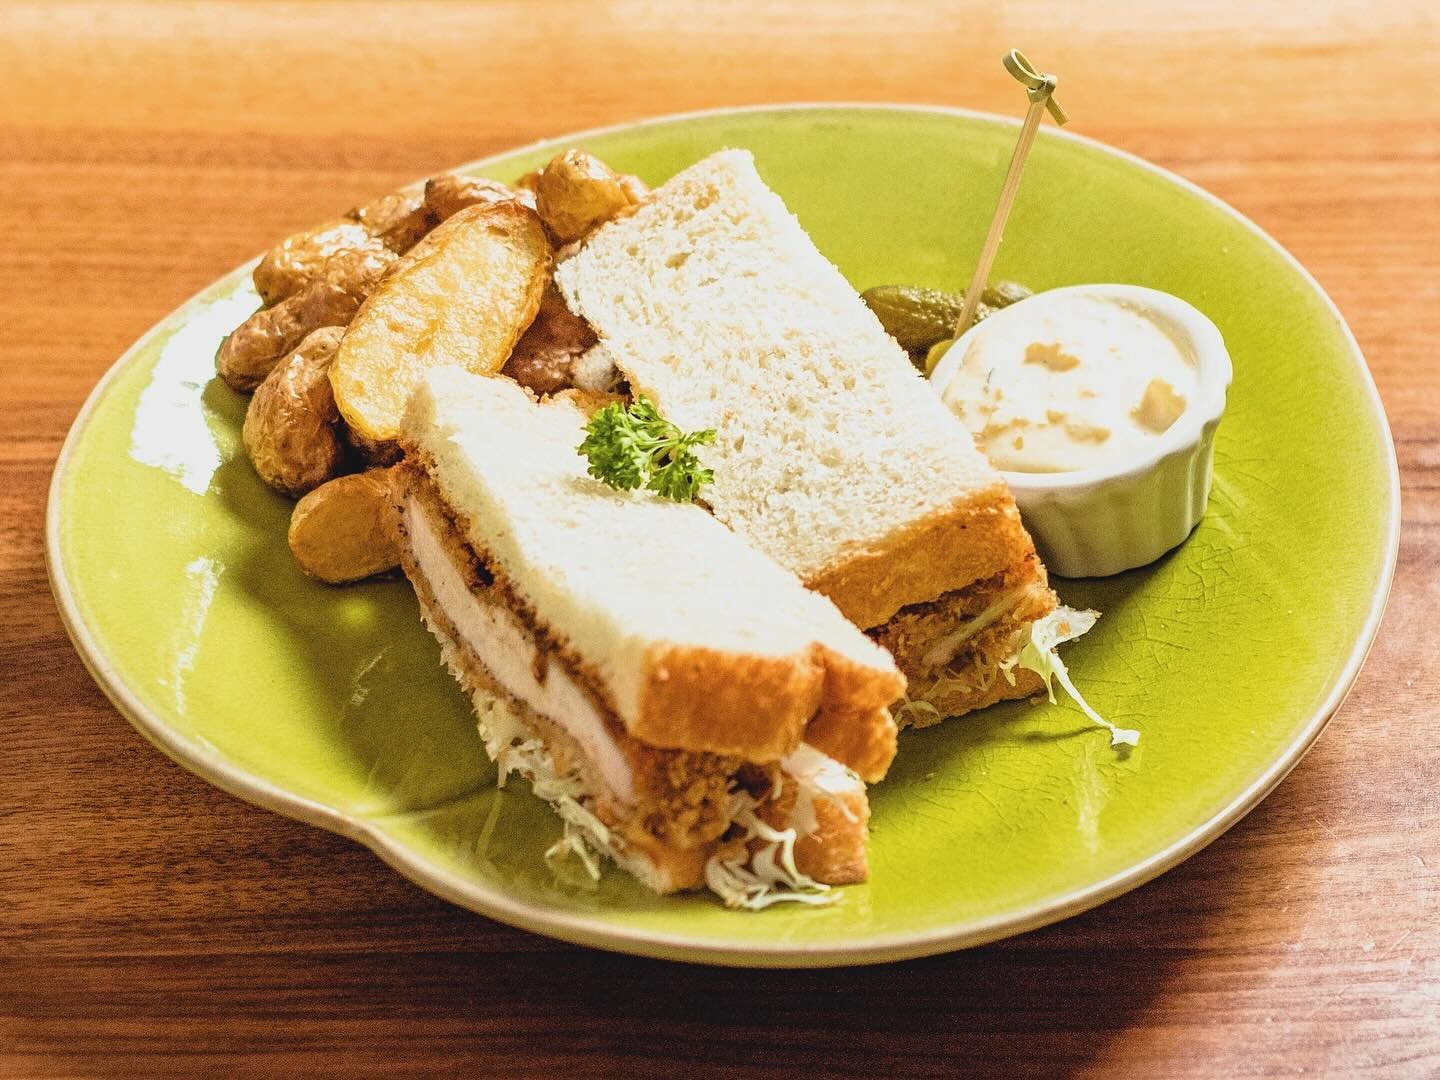 🍴Dive into our mouthwatering Katsu Sandwich at @hi_collar 🥪🥔 Indulge in Morokoshi pork katsu nestled between fluffy milk bread, served with crispy potato wedges on the side. 😋
.
.
#HiCollar #KatsuSandwich #FoodieDelight #hicollarnyc #hicollarcoff